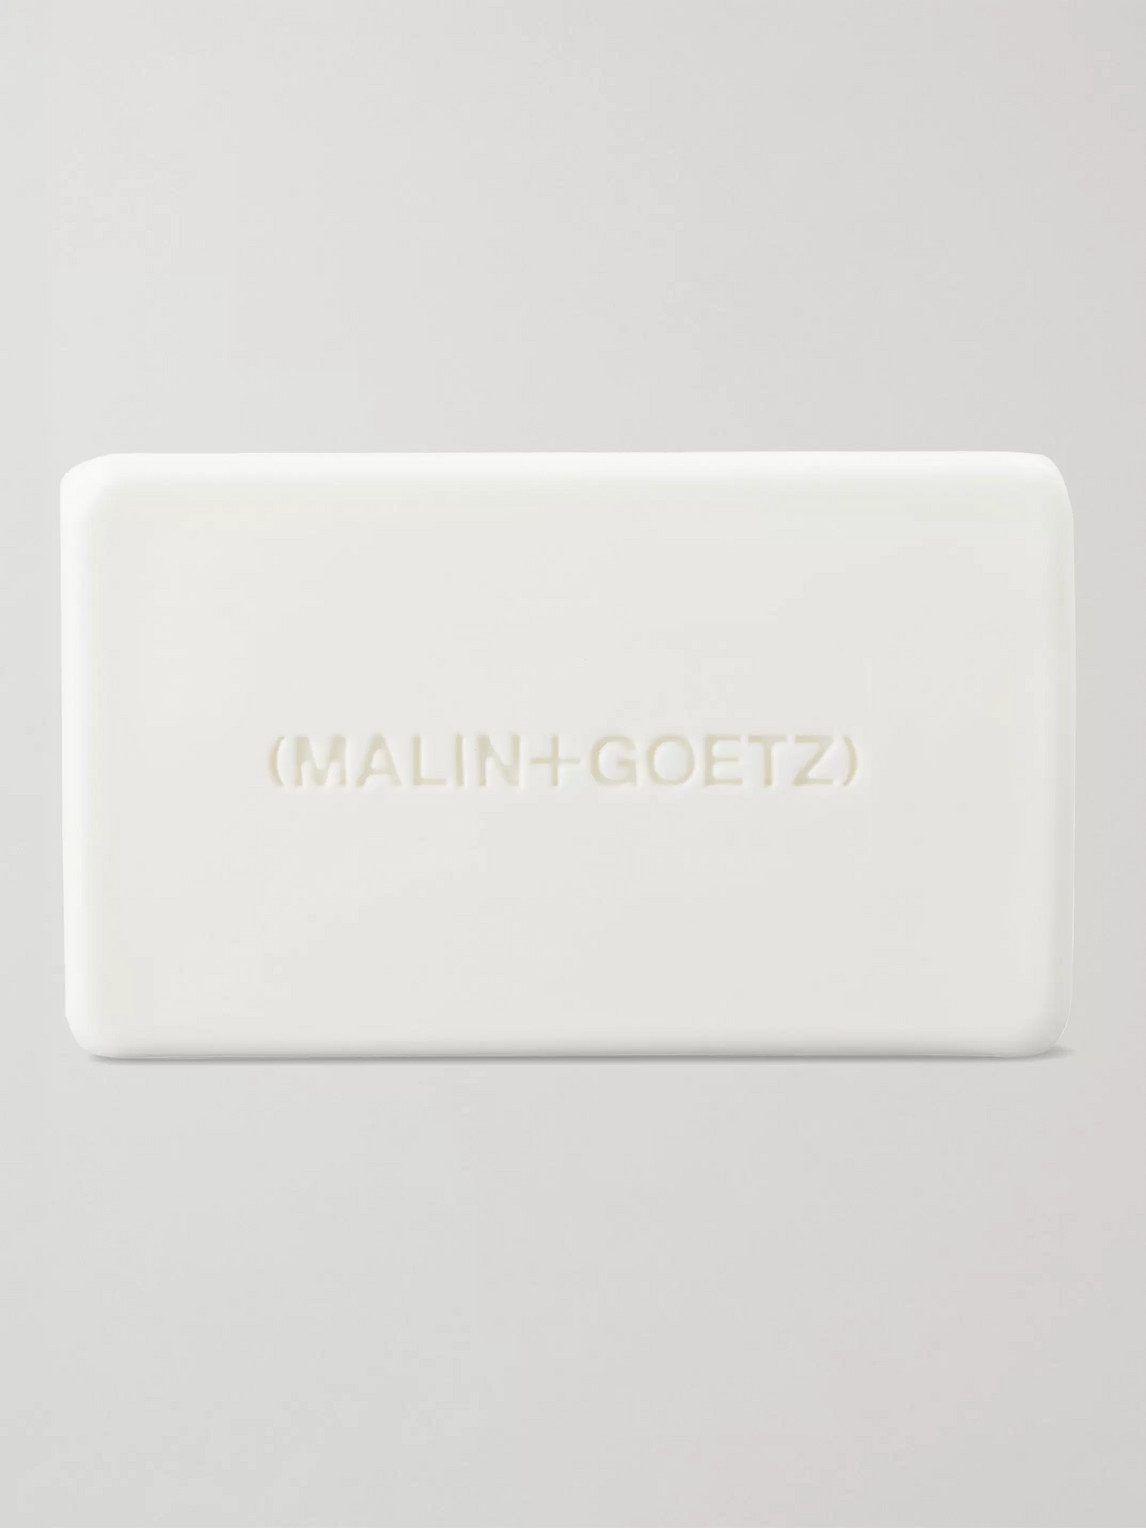 MALIN + GOETZ RUM BAR SOAP, 140G